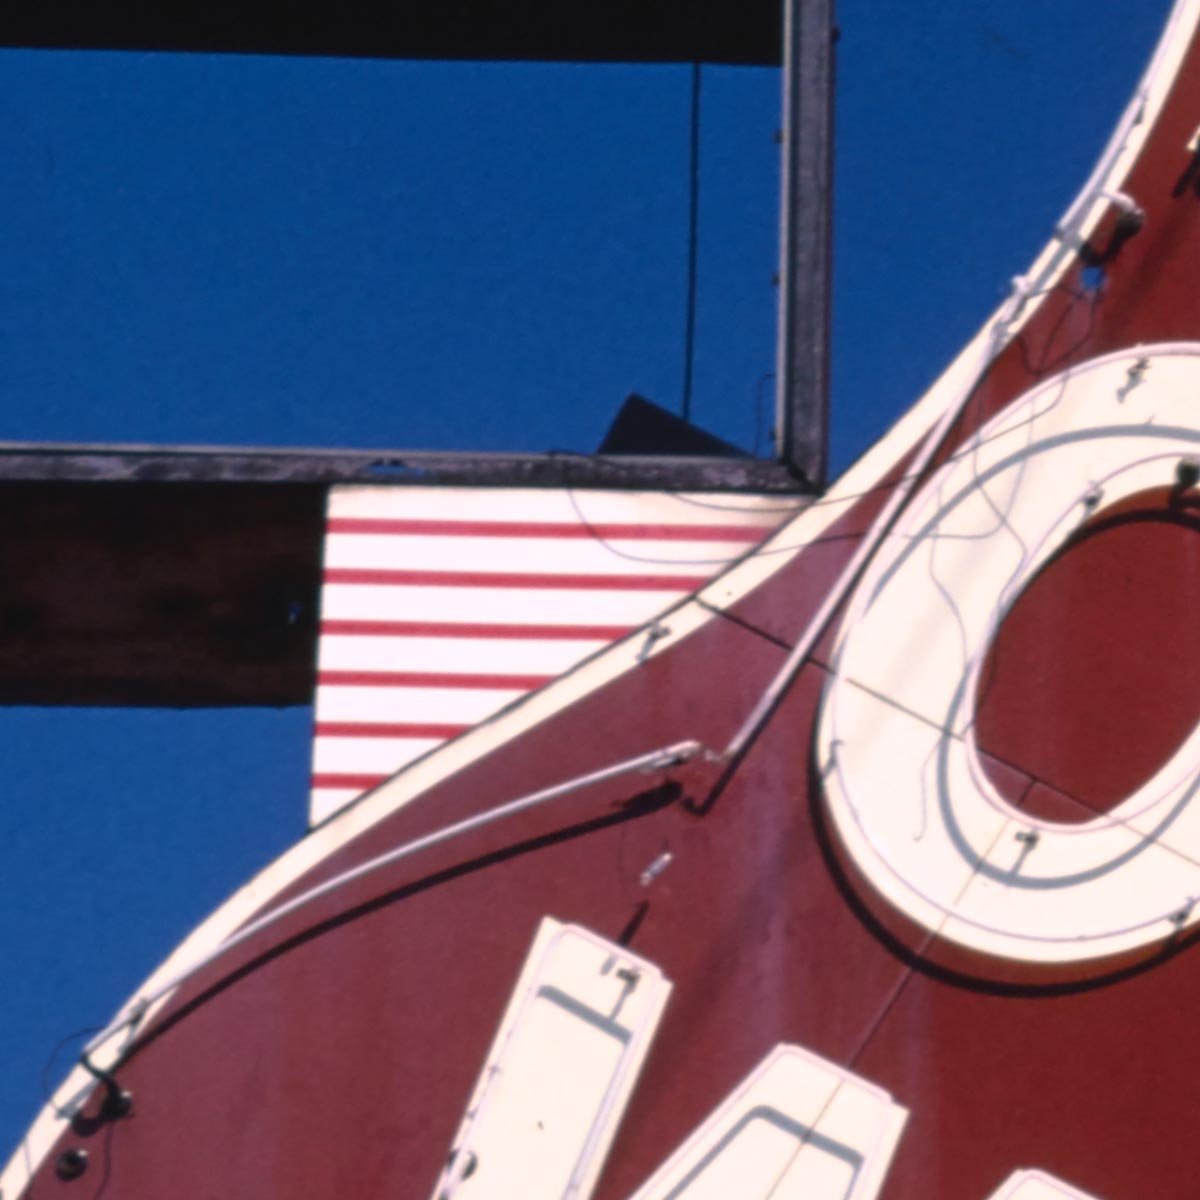 Thunderbird Lanes Bowling sign, Ypsilanti, Michigan by John Margolies